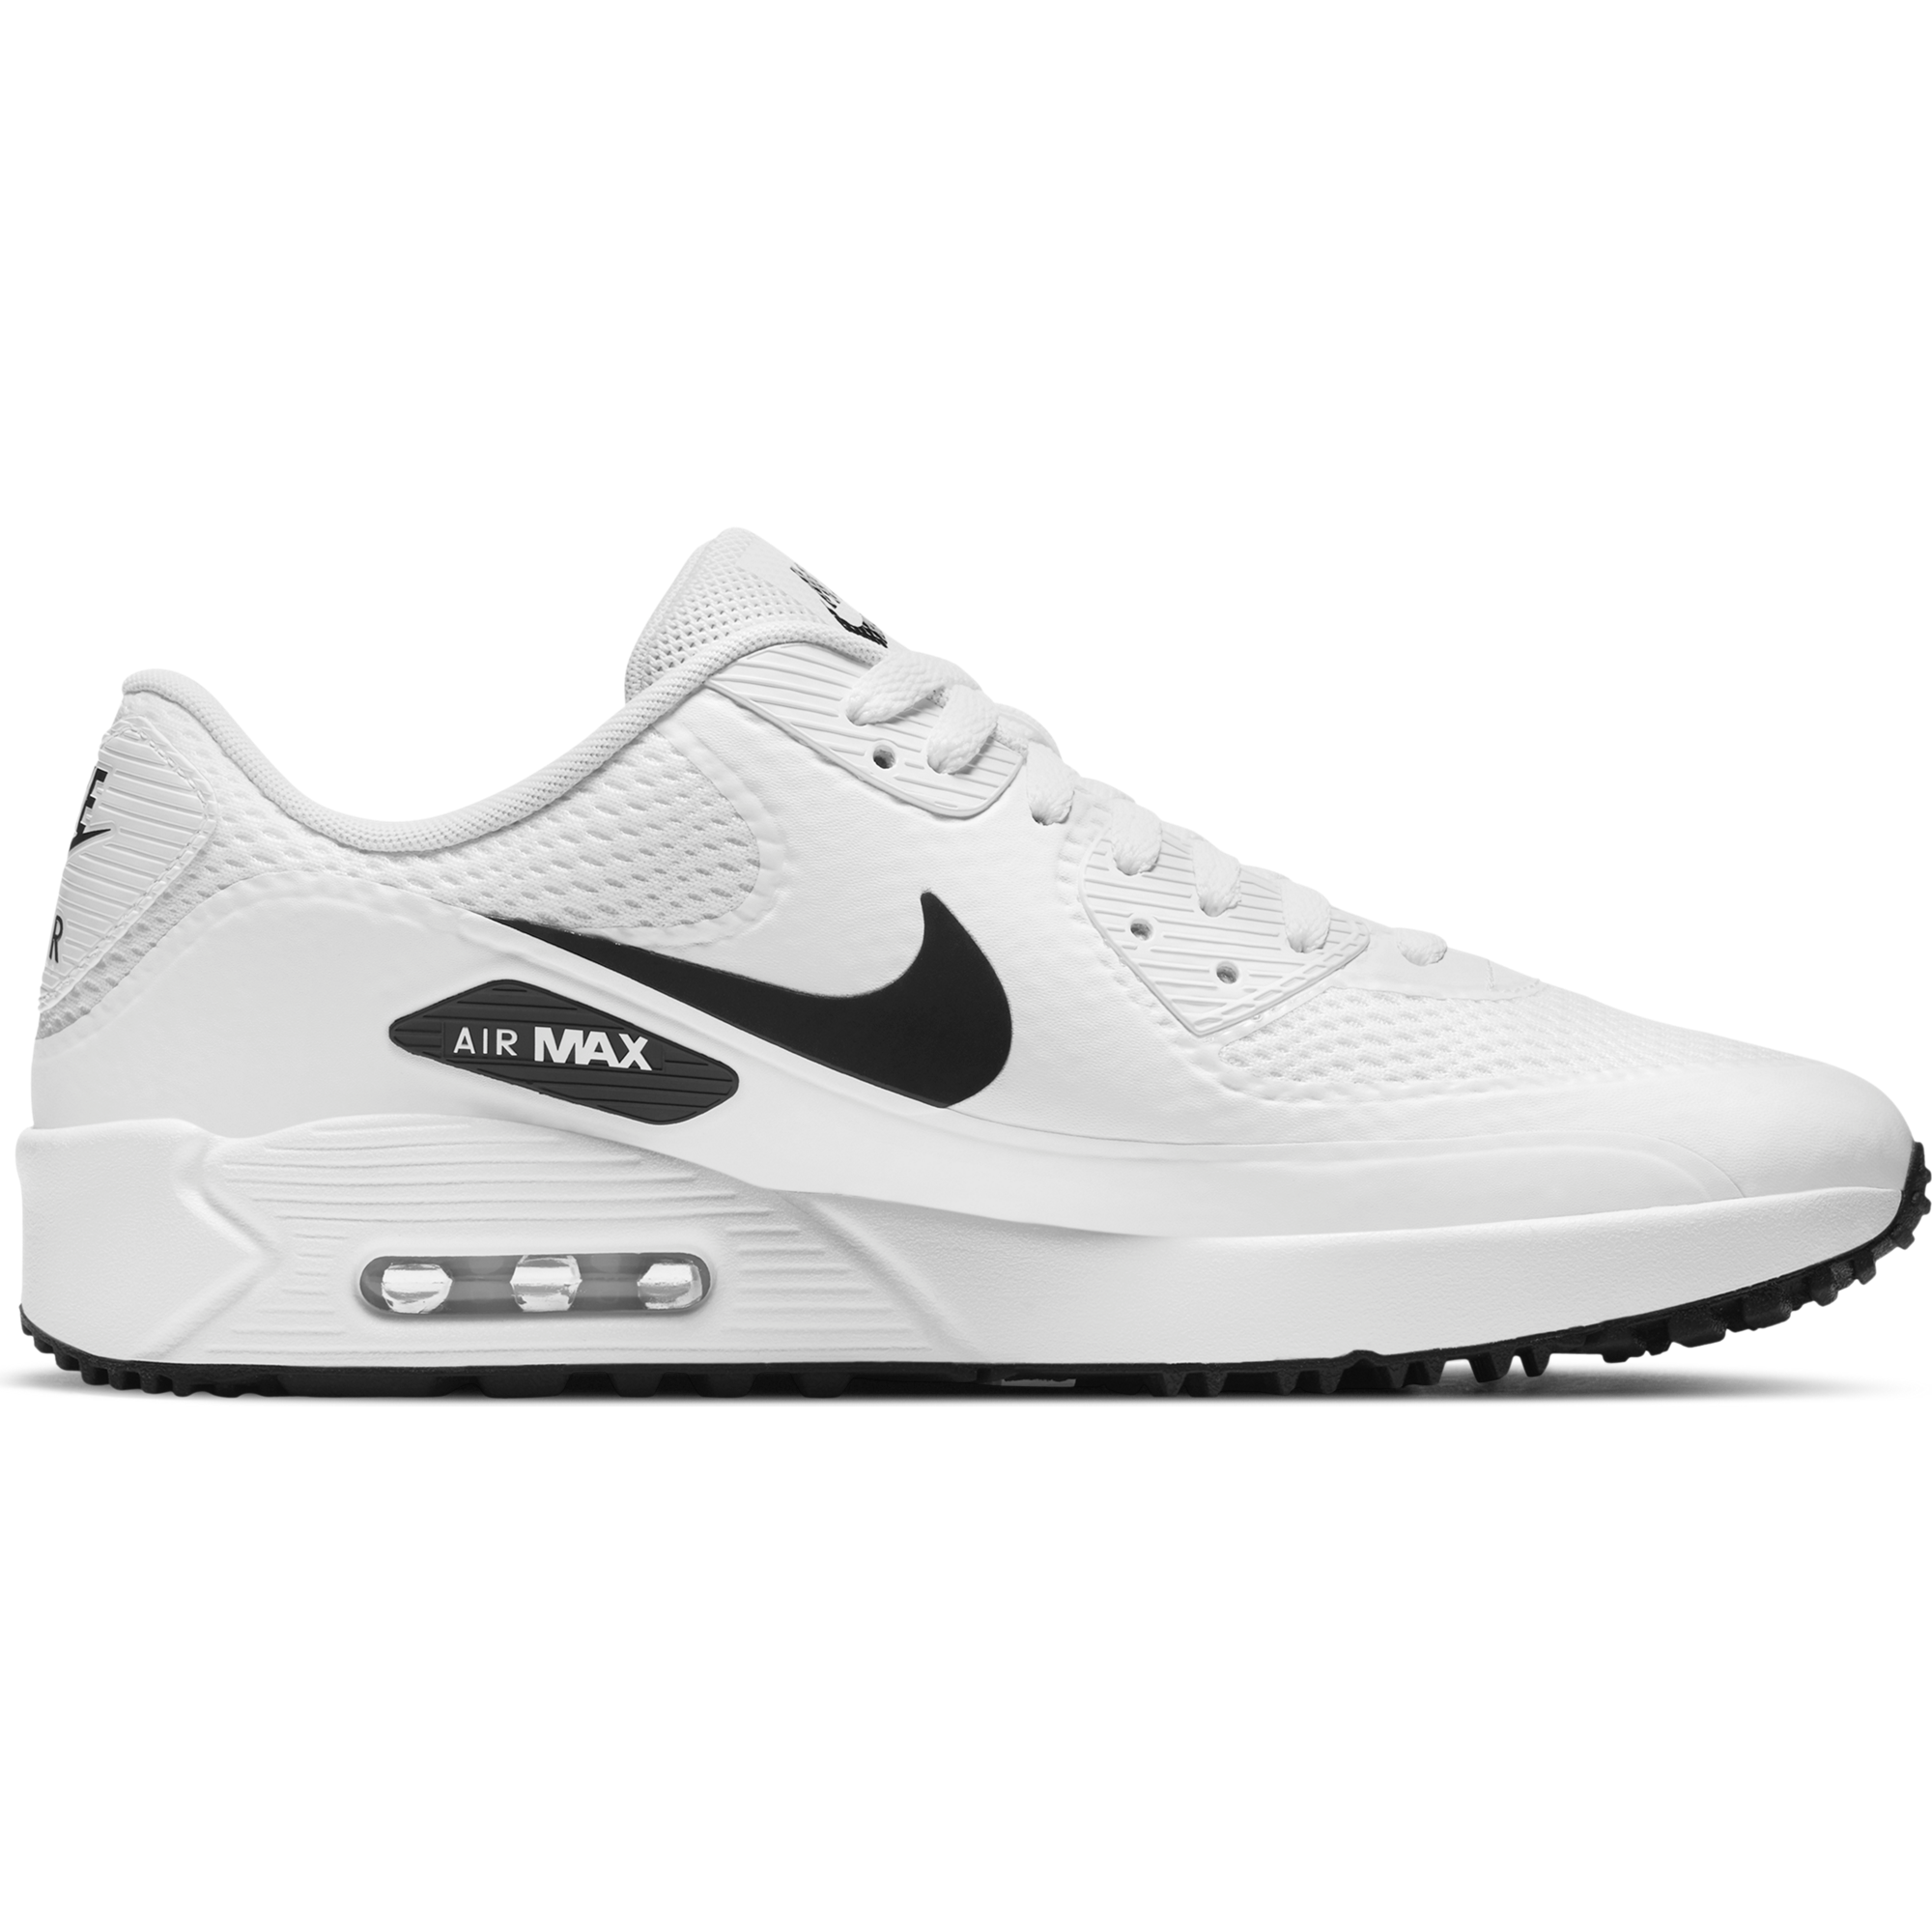 Air Max 90 G Spikeless Golf Shoe - White/Black | NIKE | Golf Shoes 